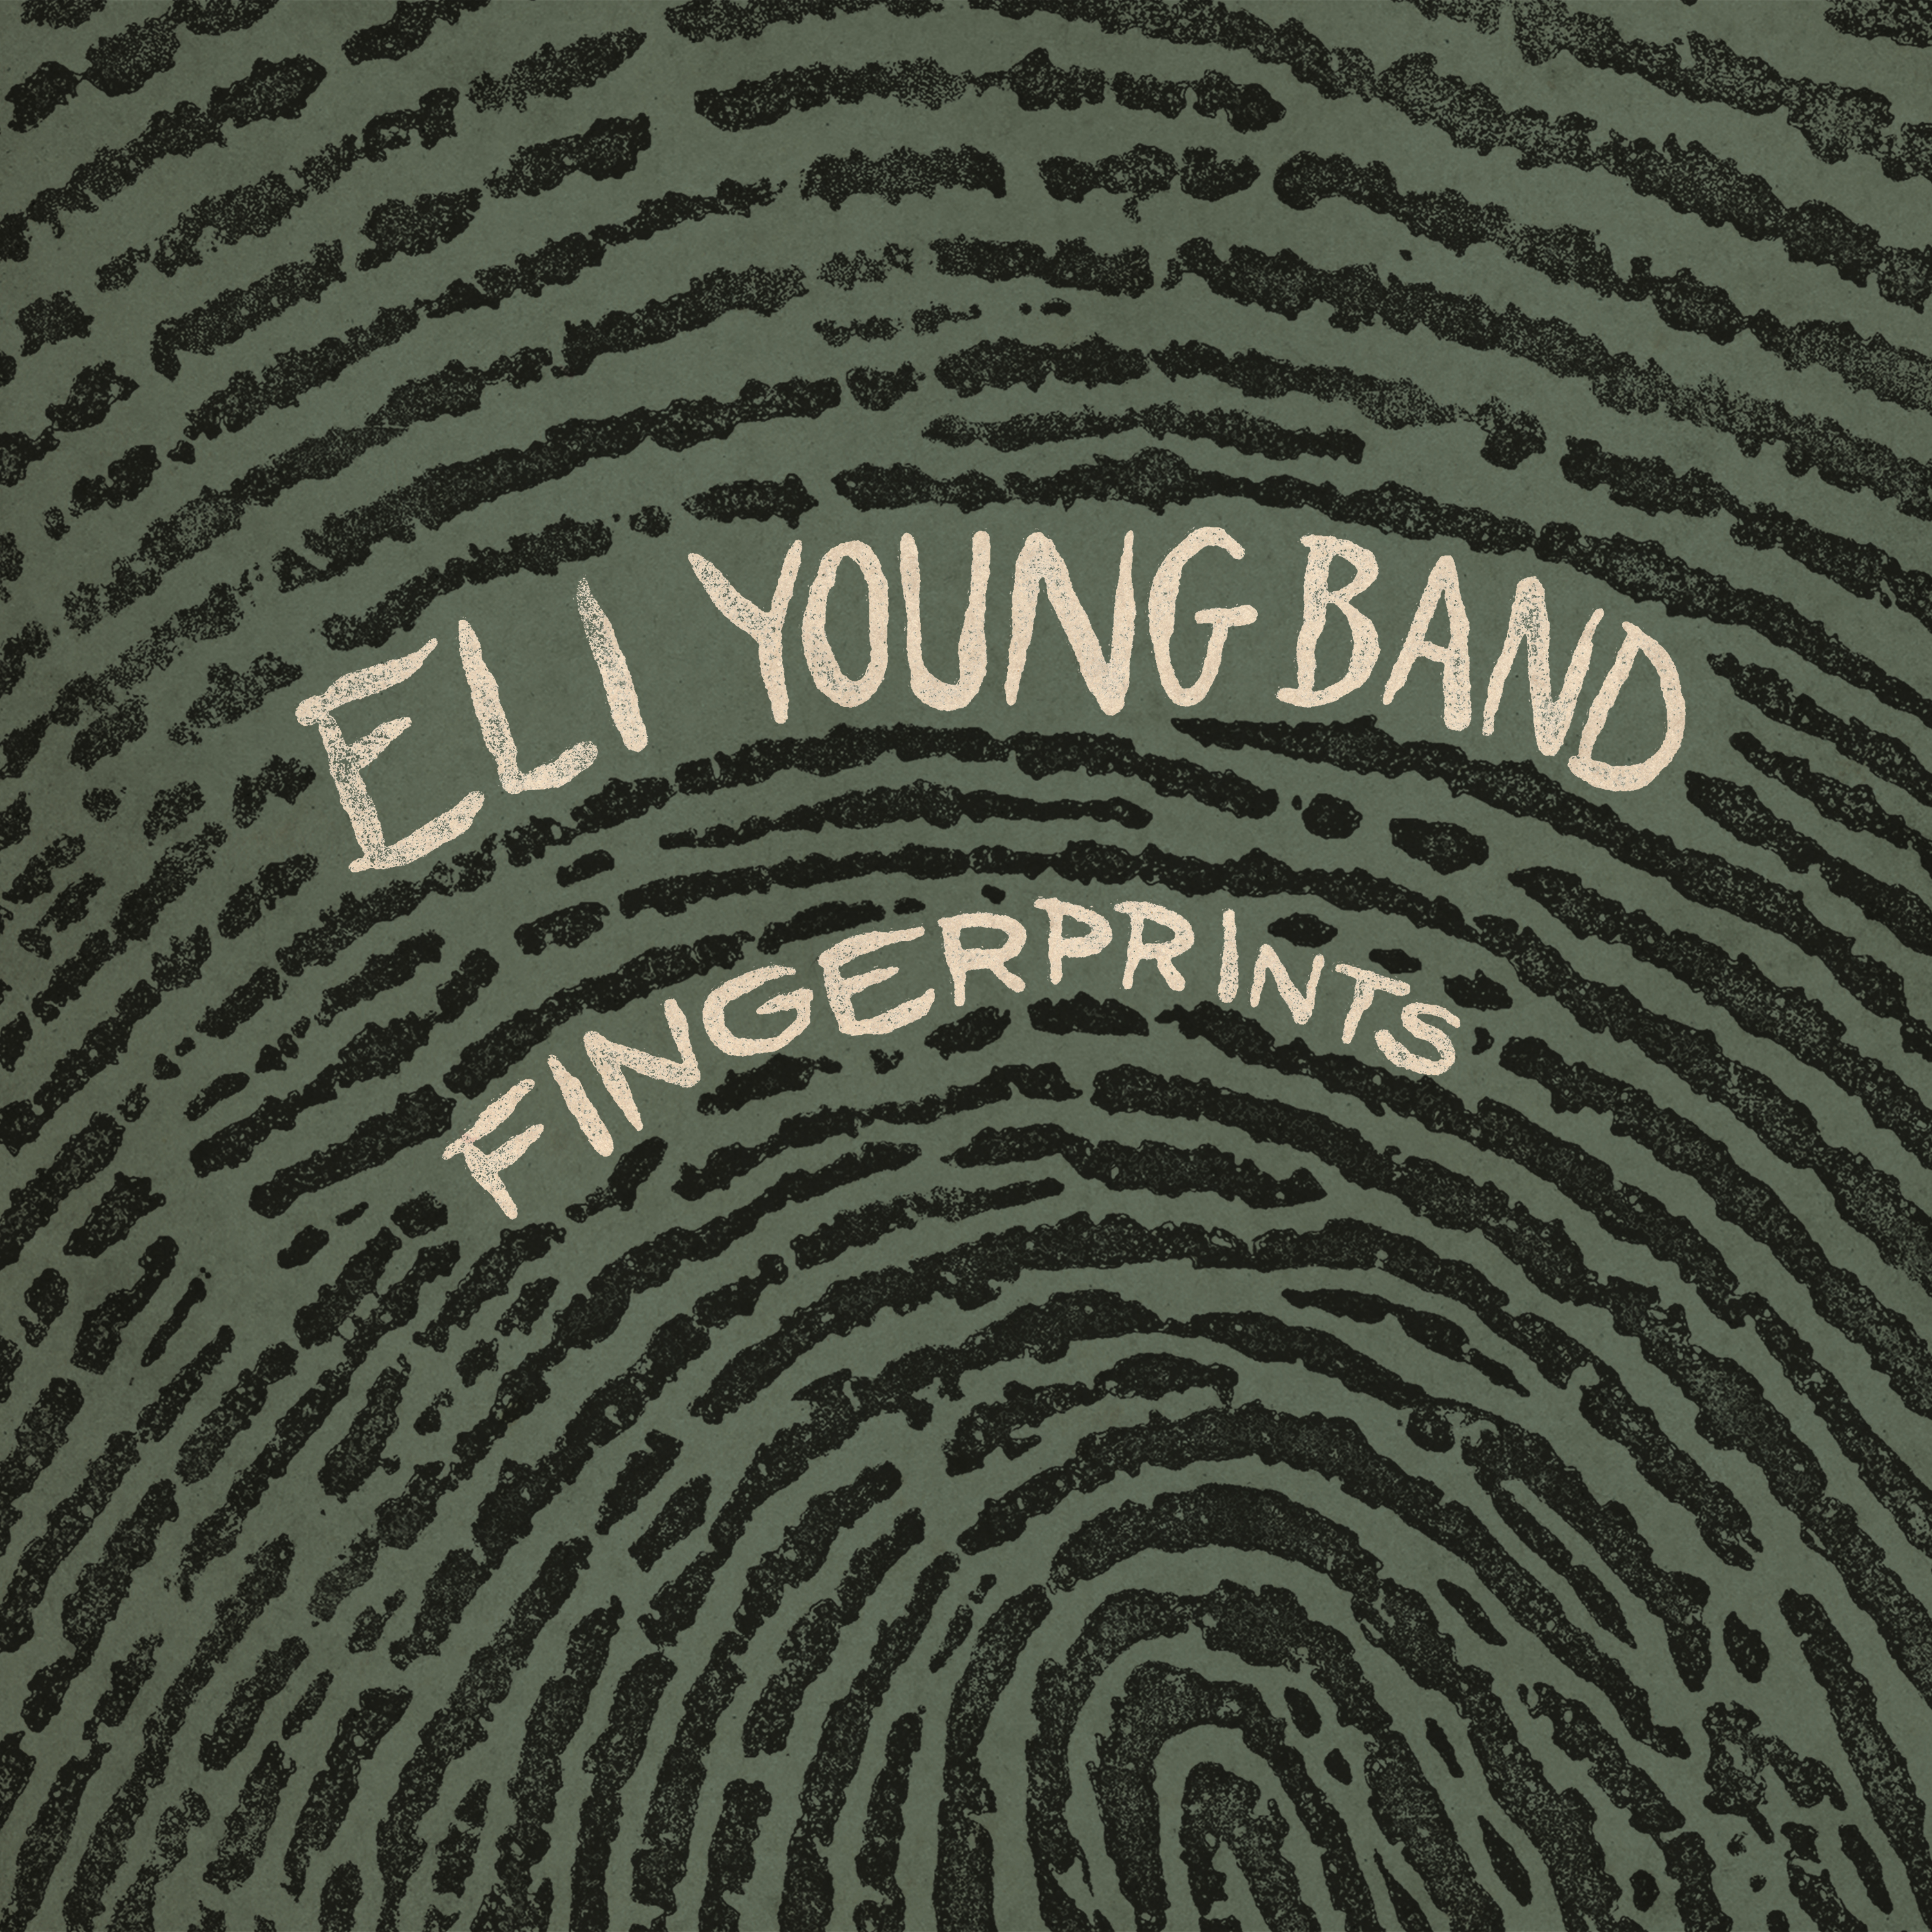 Eli Young Band Reveals Details on New Album ‘Fingerprints’